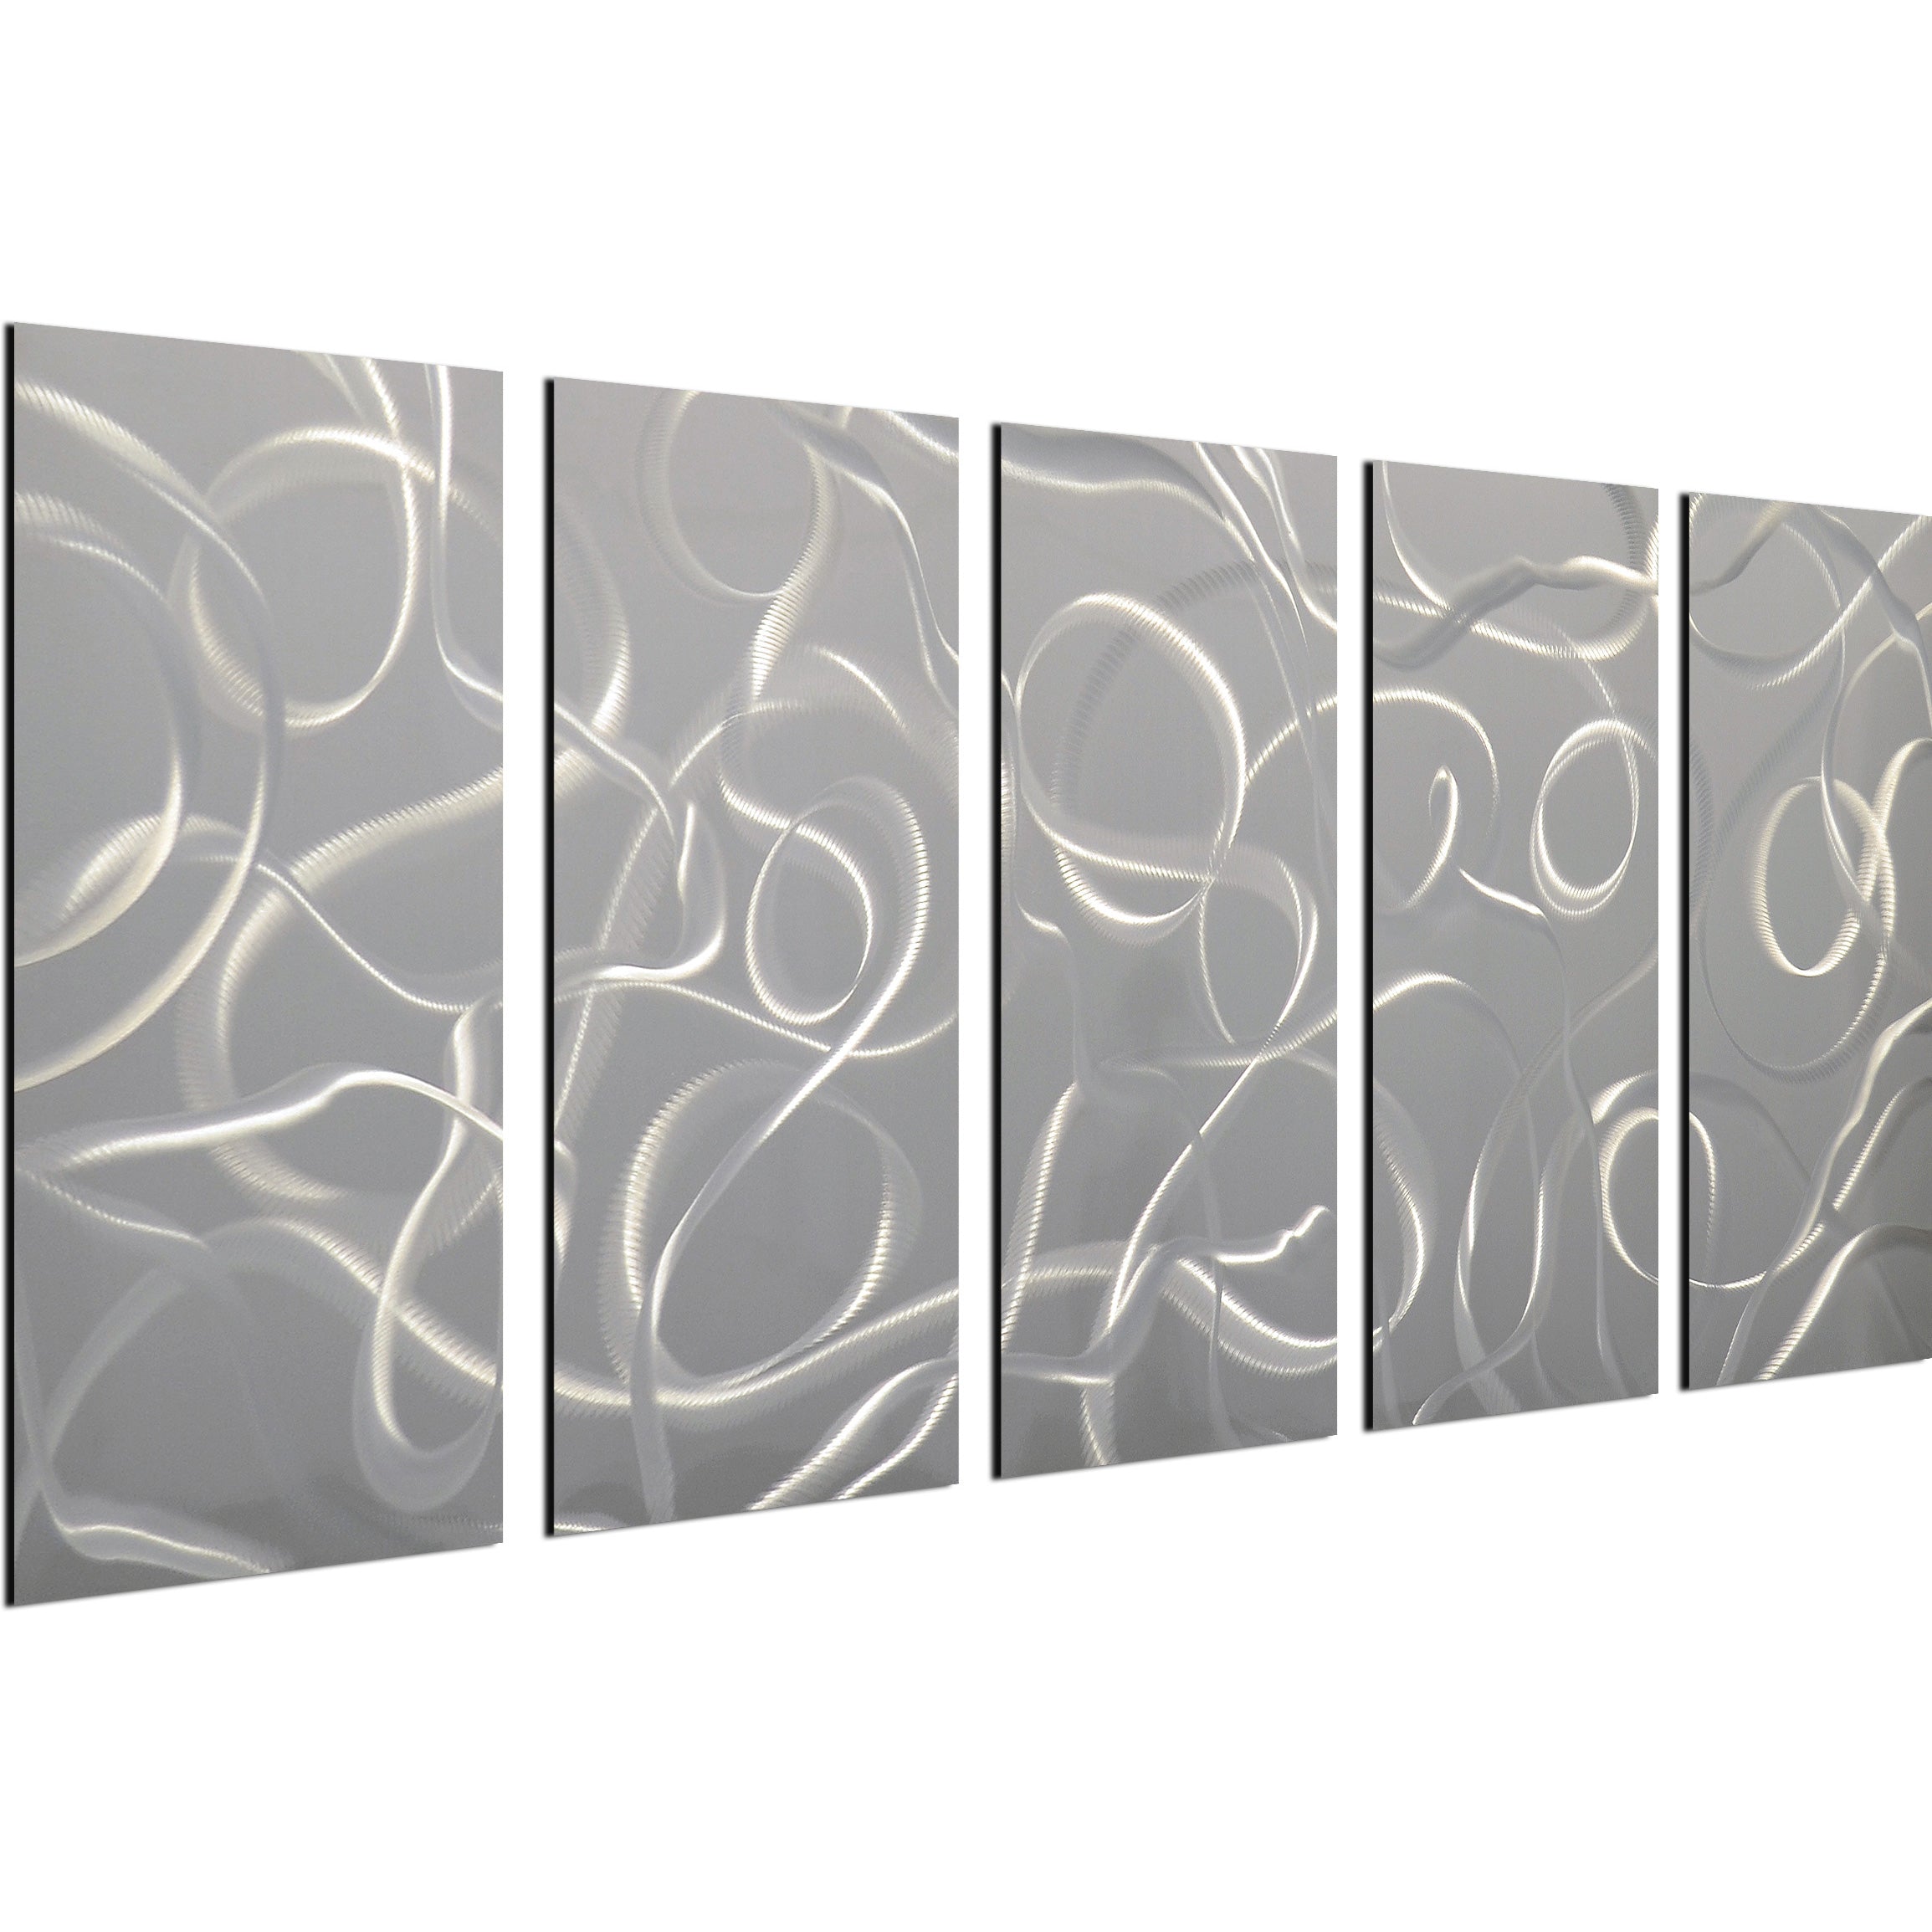 A cacophony of twirls 5 Piece Handmade Metal Wall Art